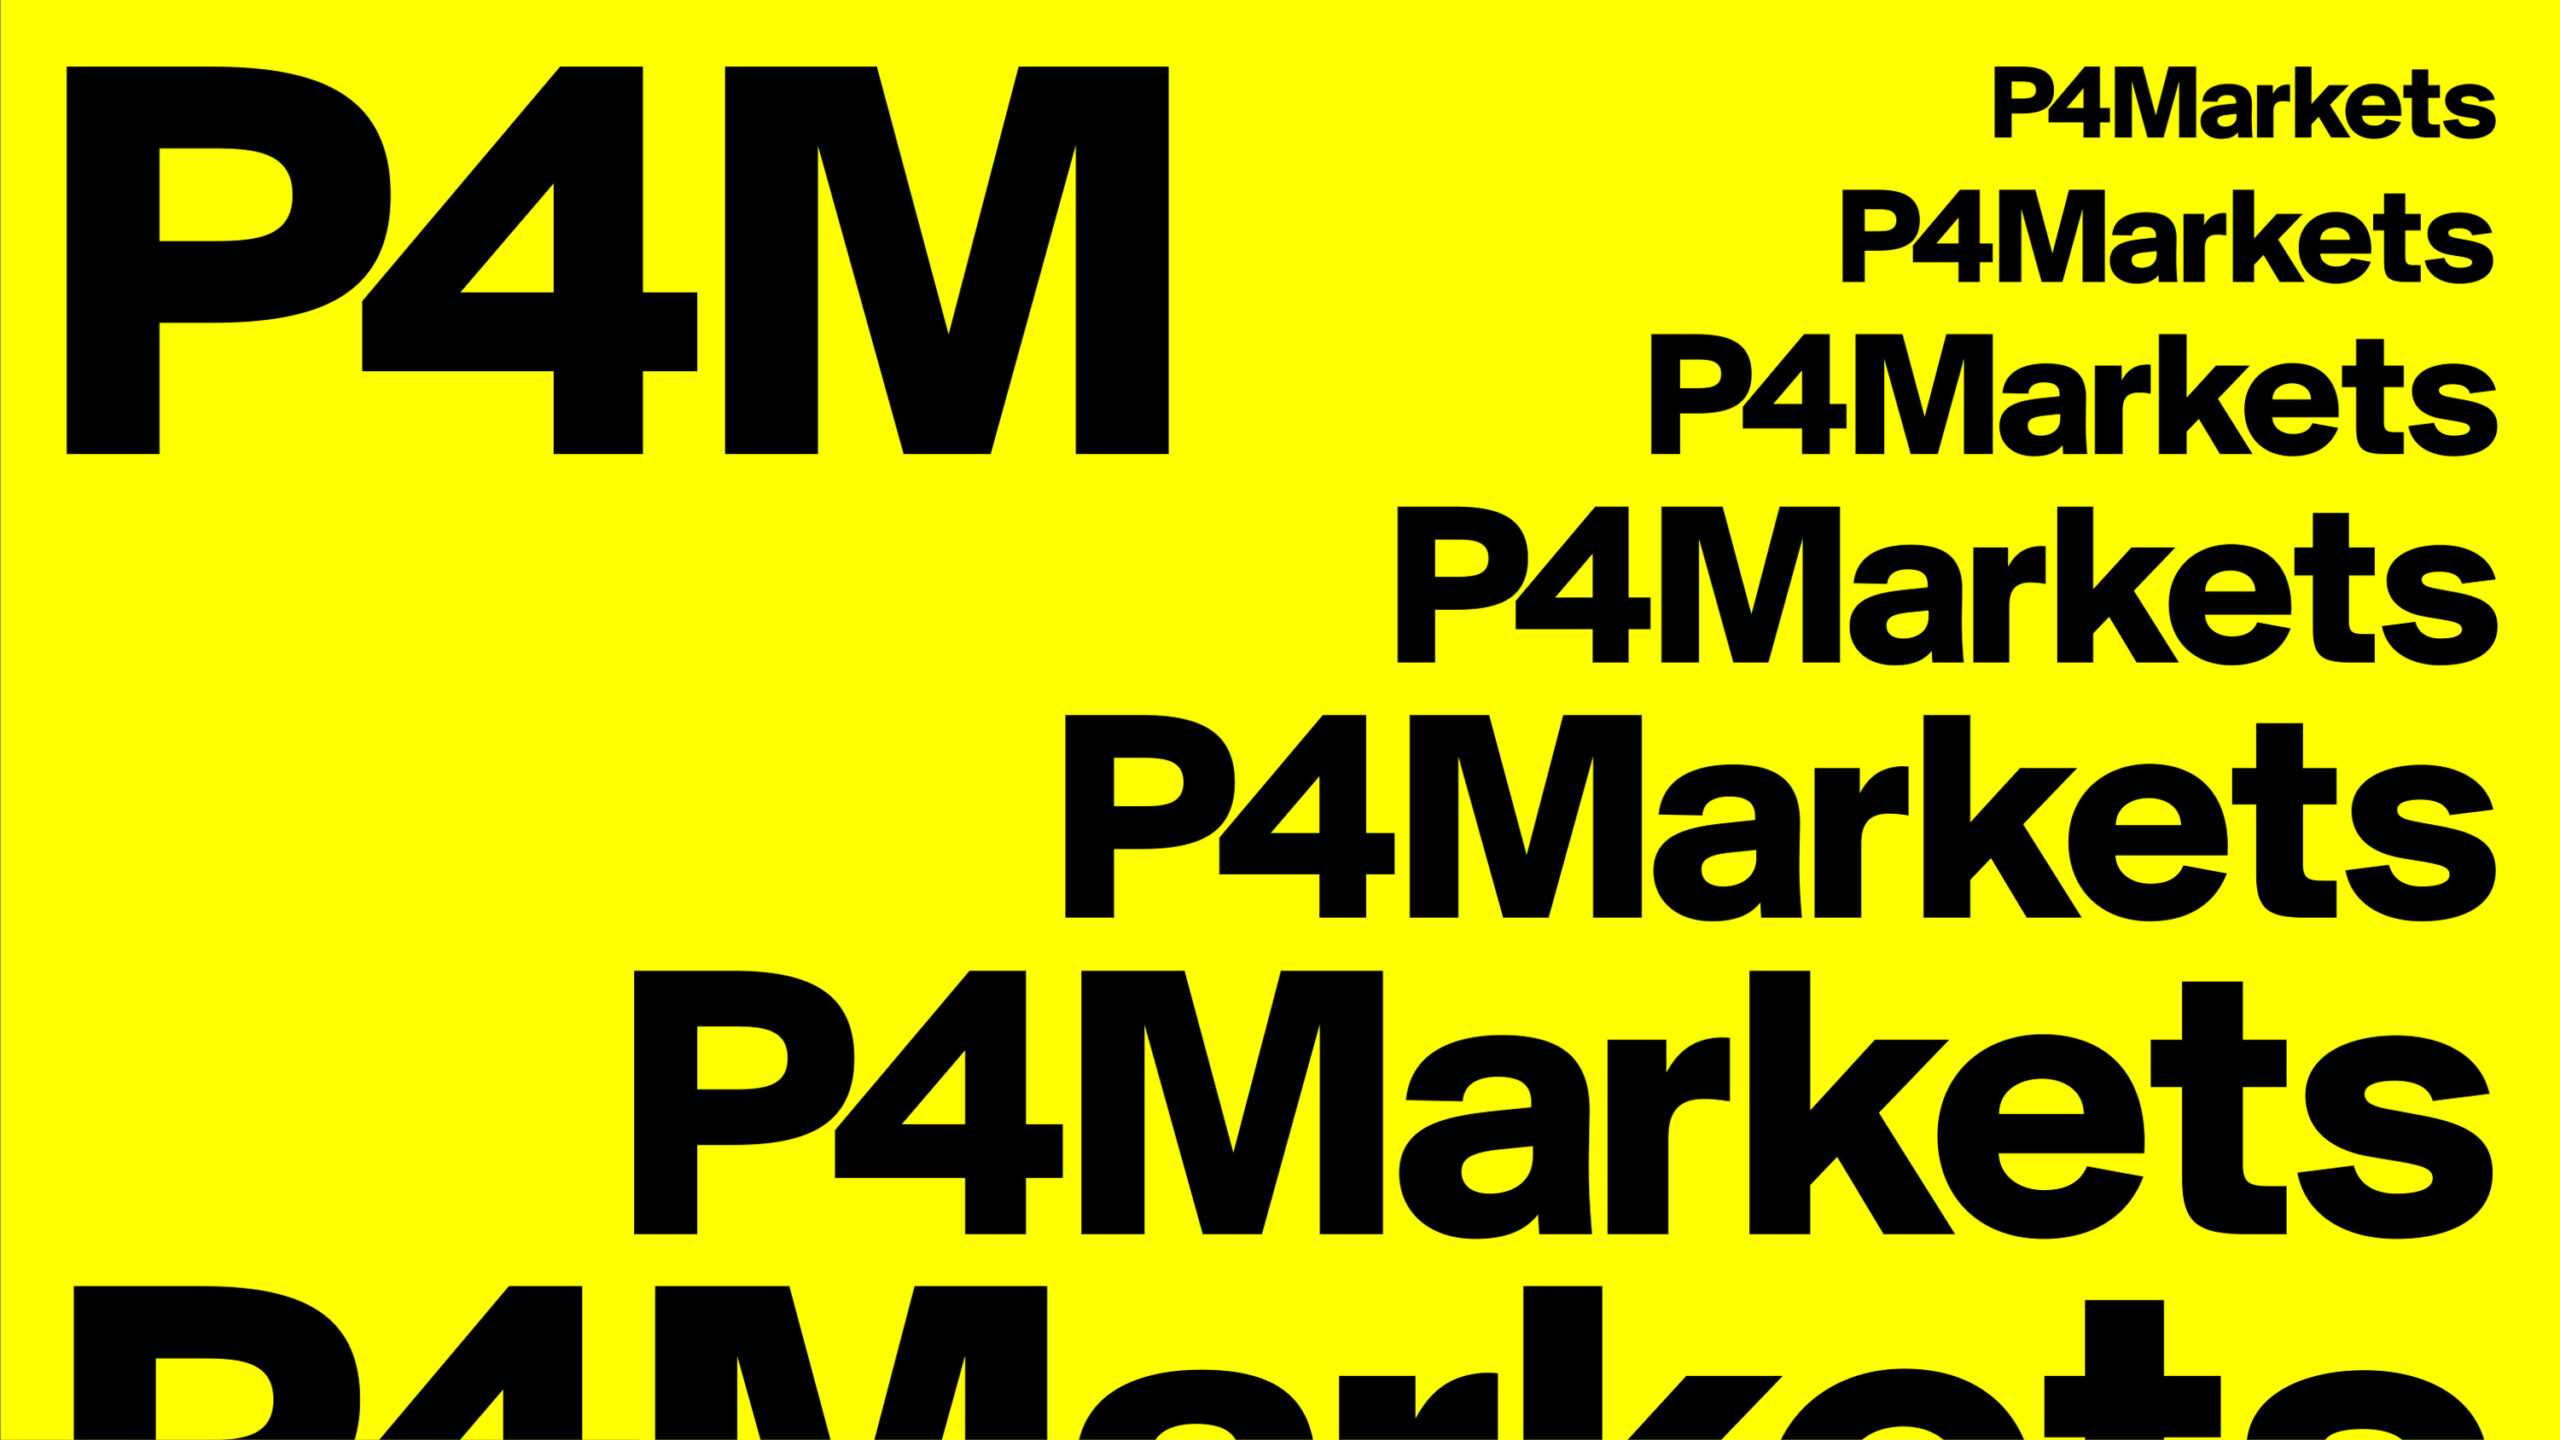 The logo of P4Markets